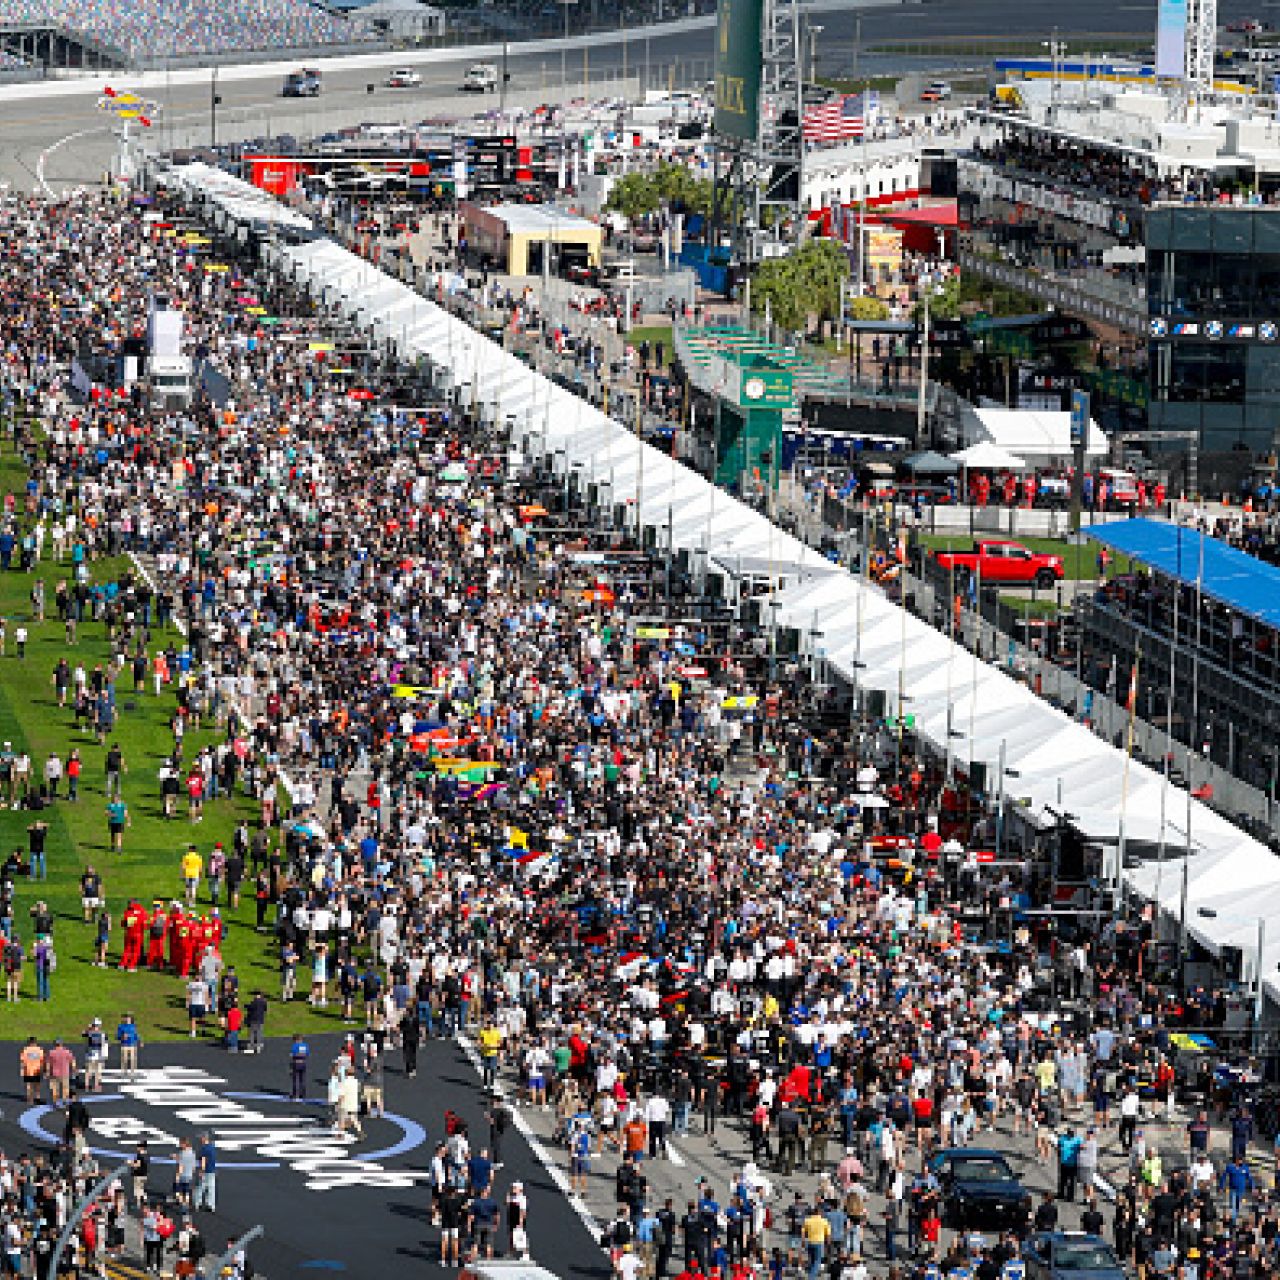 Aerial view of crowded pit lane at Daytona International Speedwqay